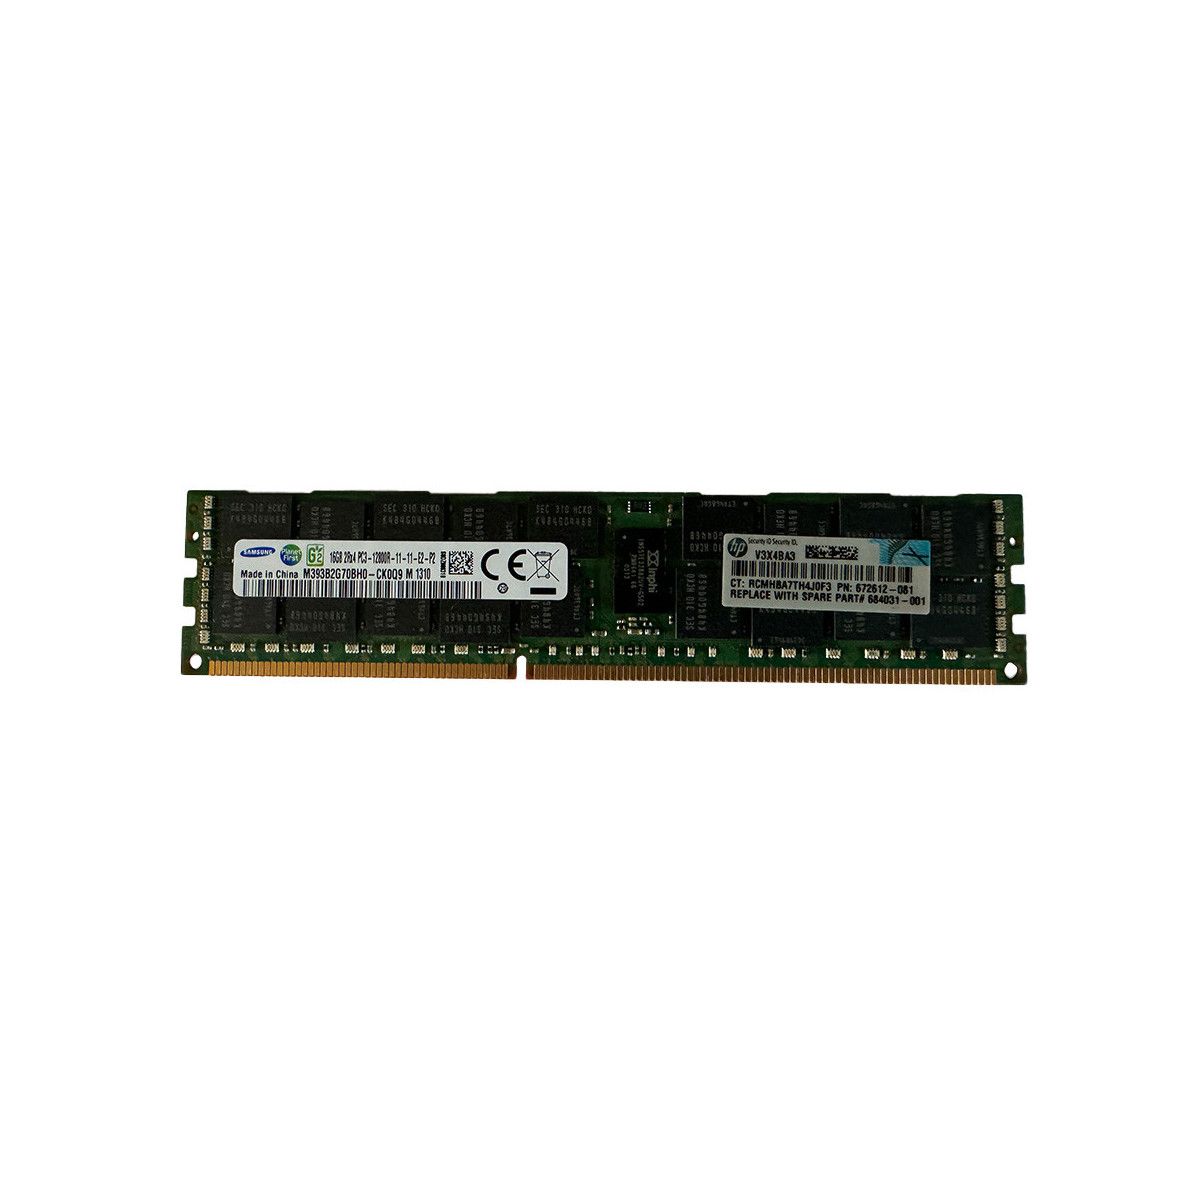 7102800-MS –- Memstar 1x 16GB DDR3-1600 RDIMM PC3L-12800R